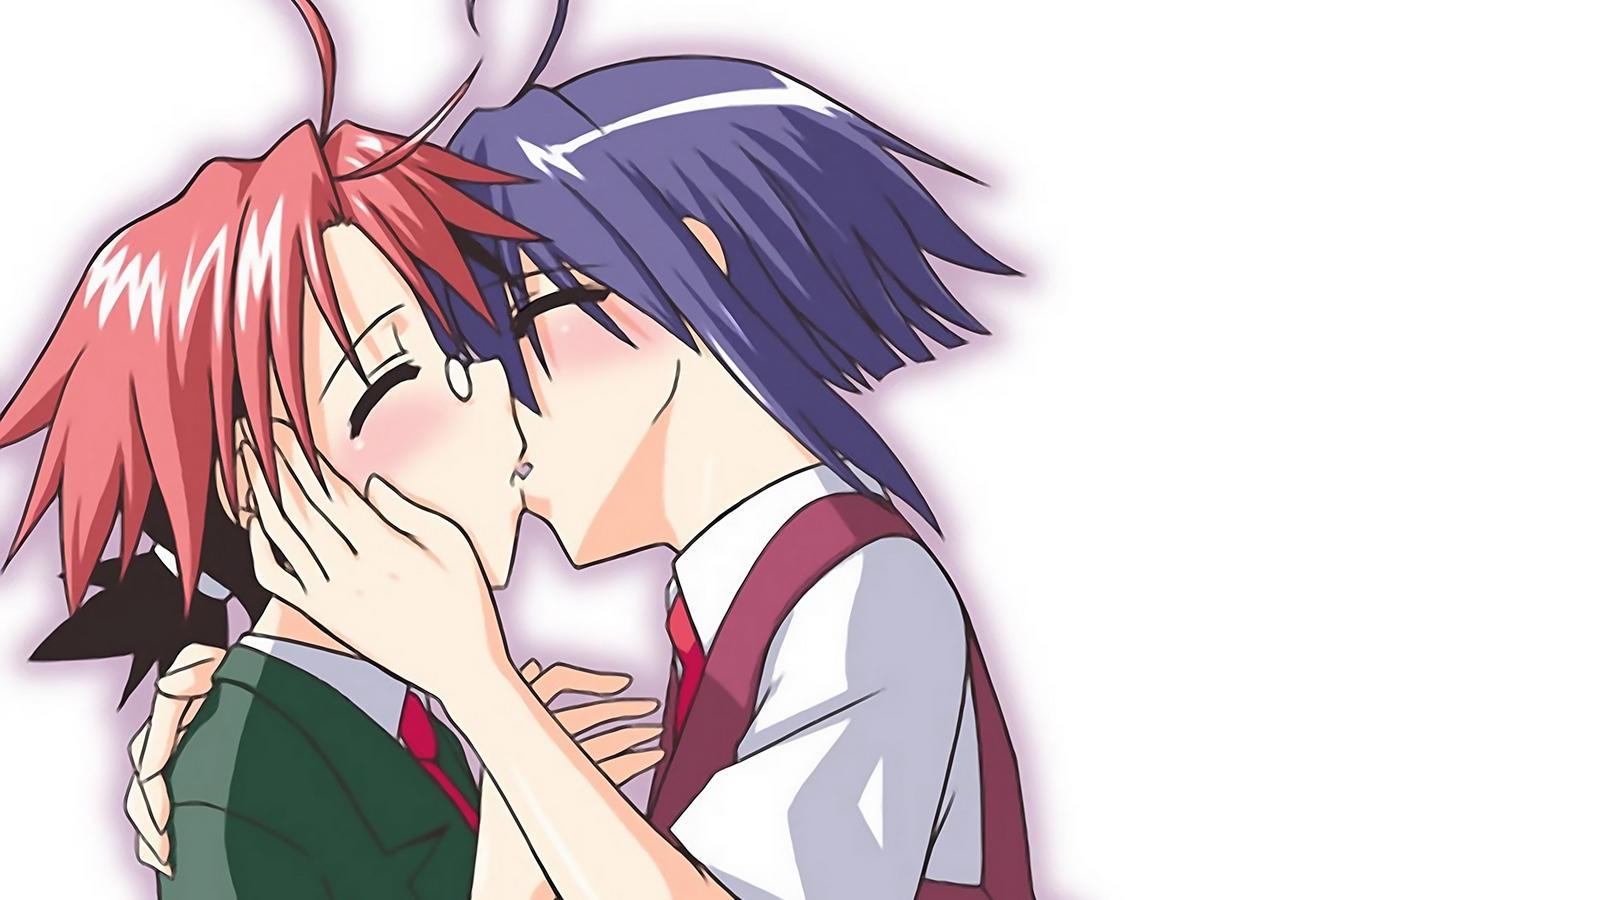 Download wallpaper 1600x900 anime, boy, girl, kiss, tender